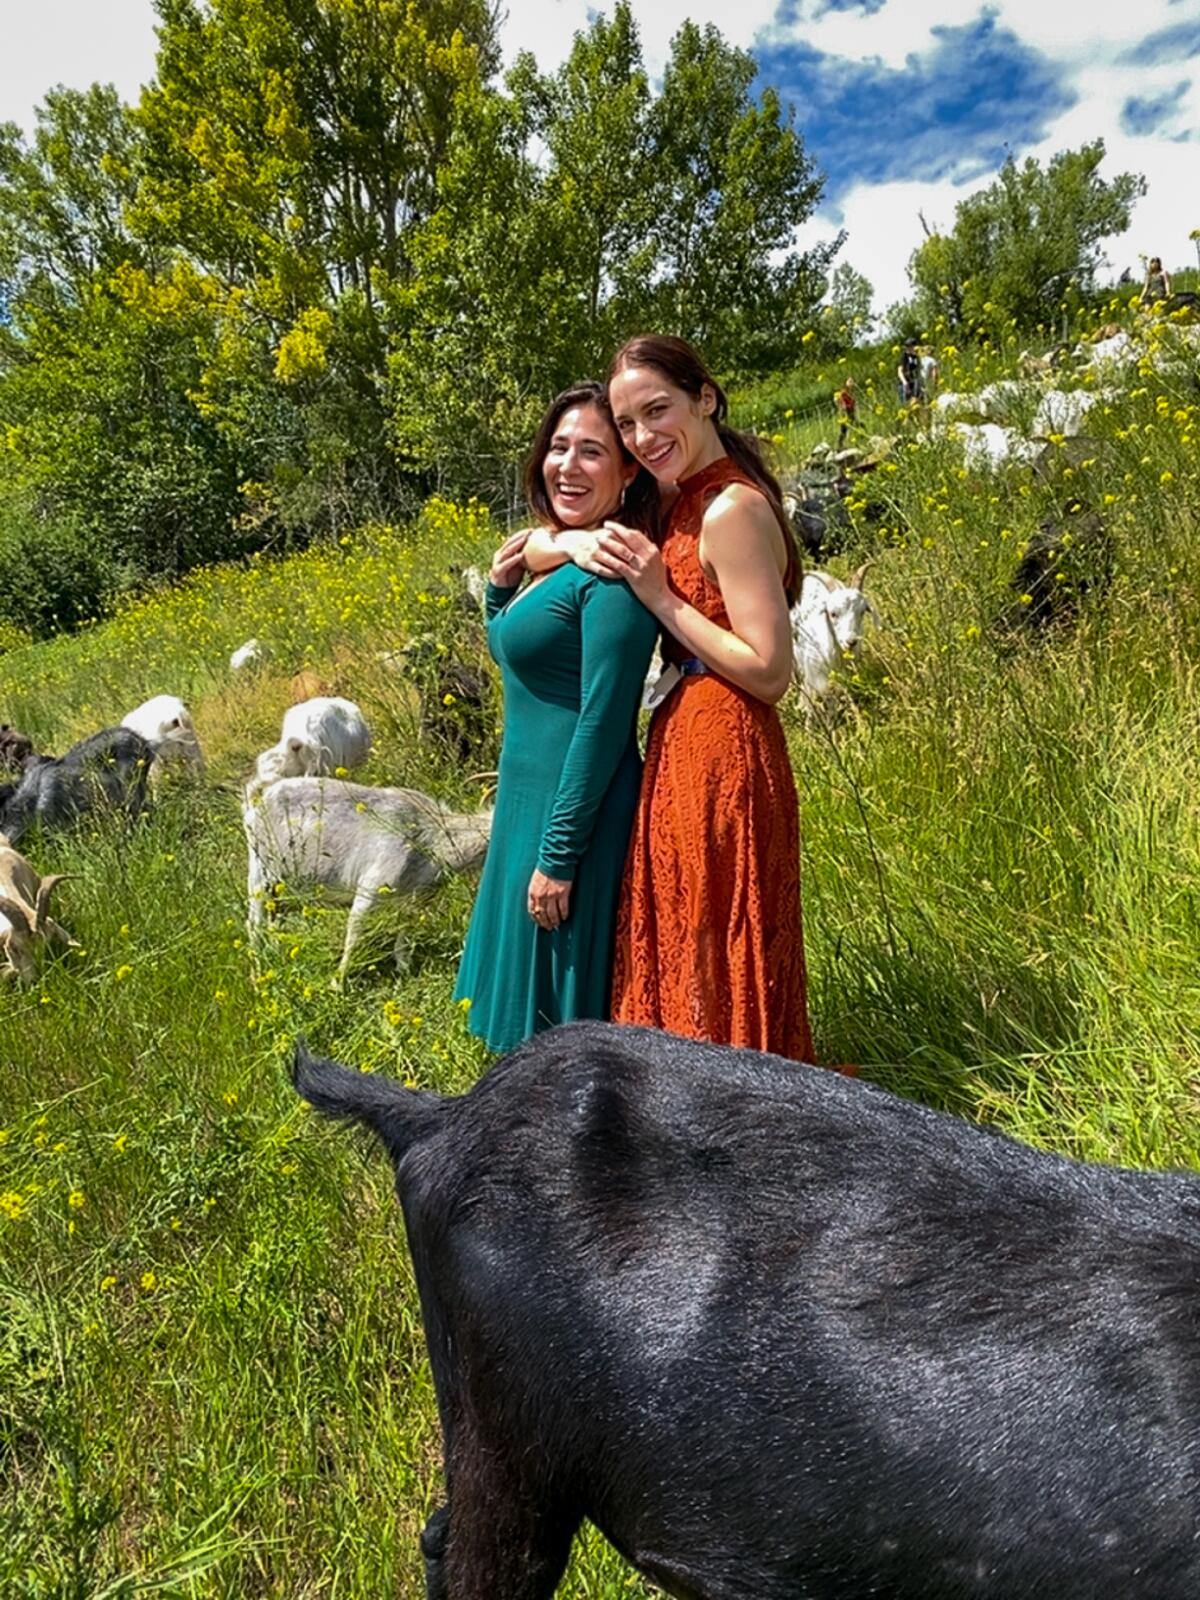 "Wynonna Earp" creator Emily Andras and actress Melanie Scrofano pose on a hillside among goats. 